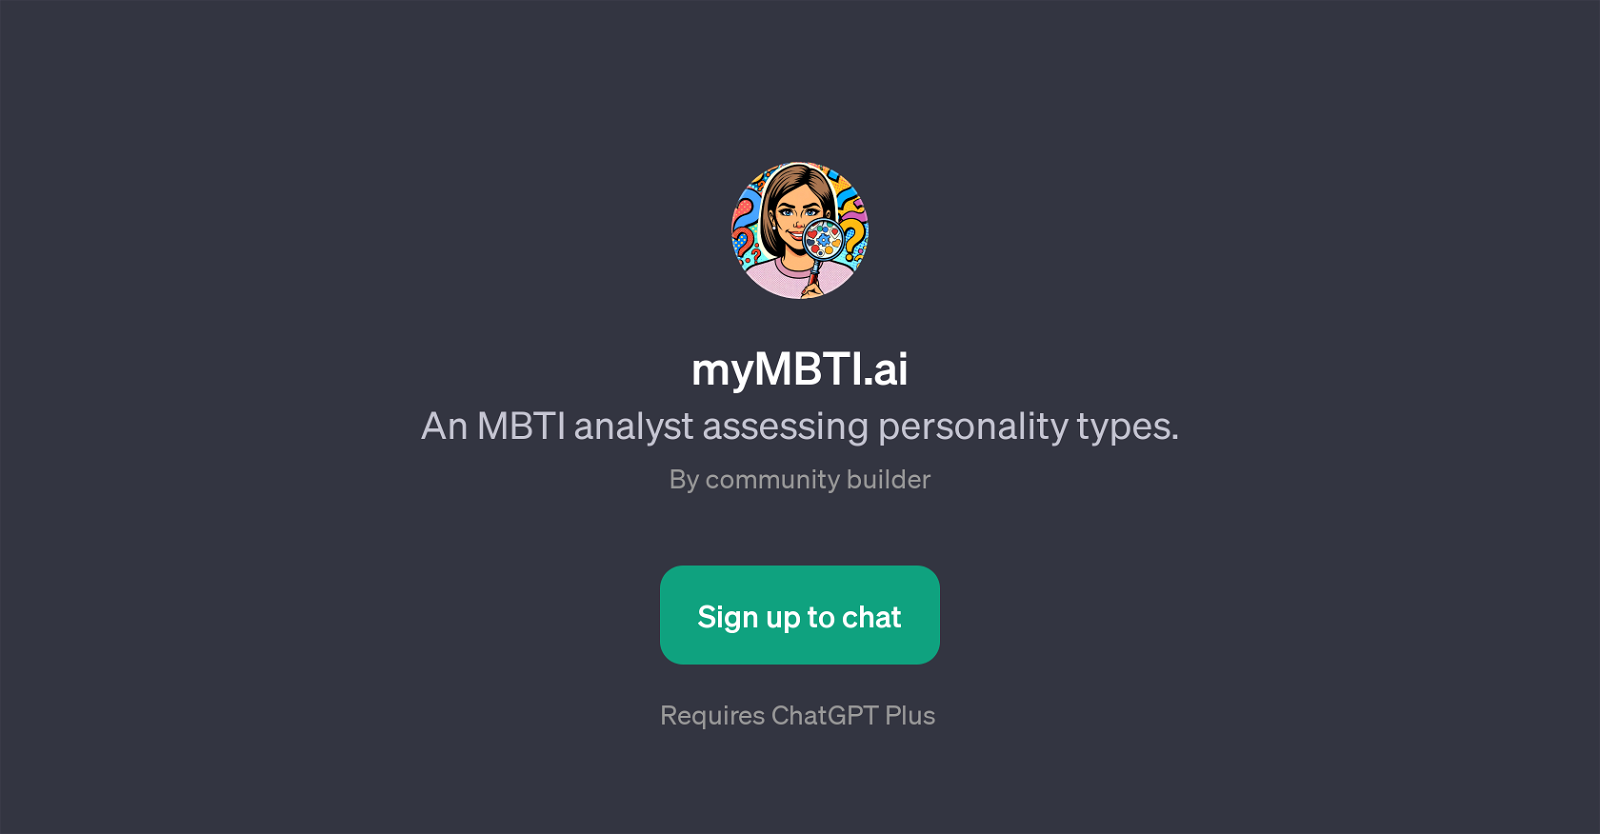 myMBTI.ai website